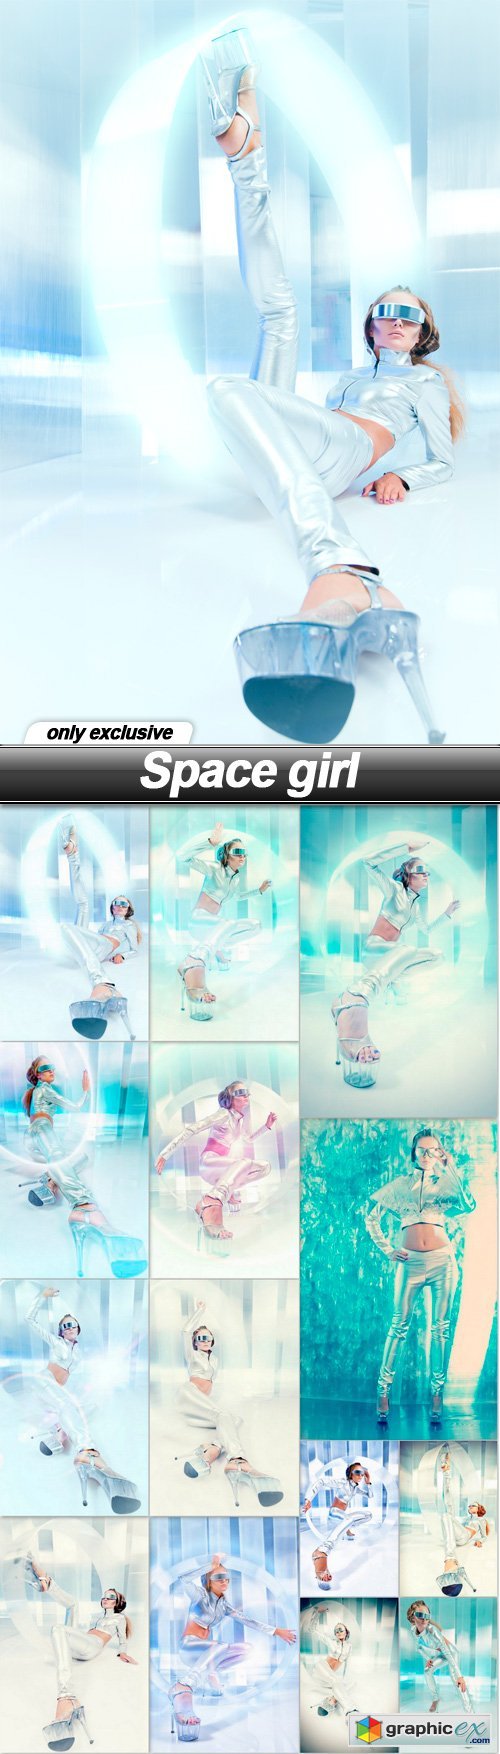 Space girl - 14 UHQ JPEG